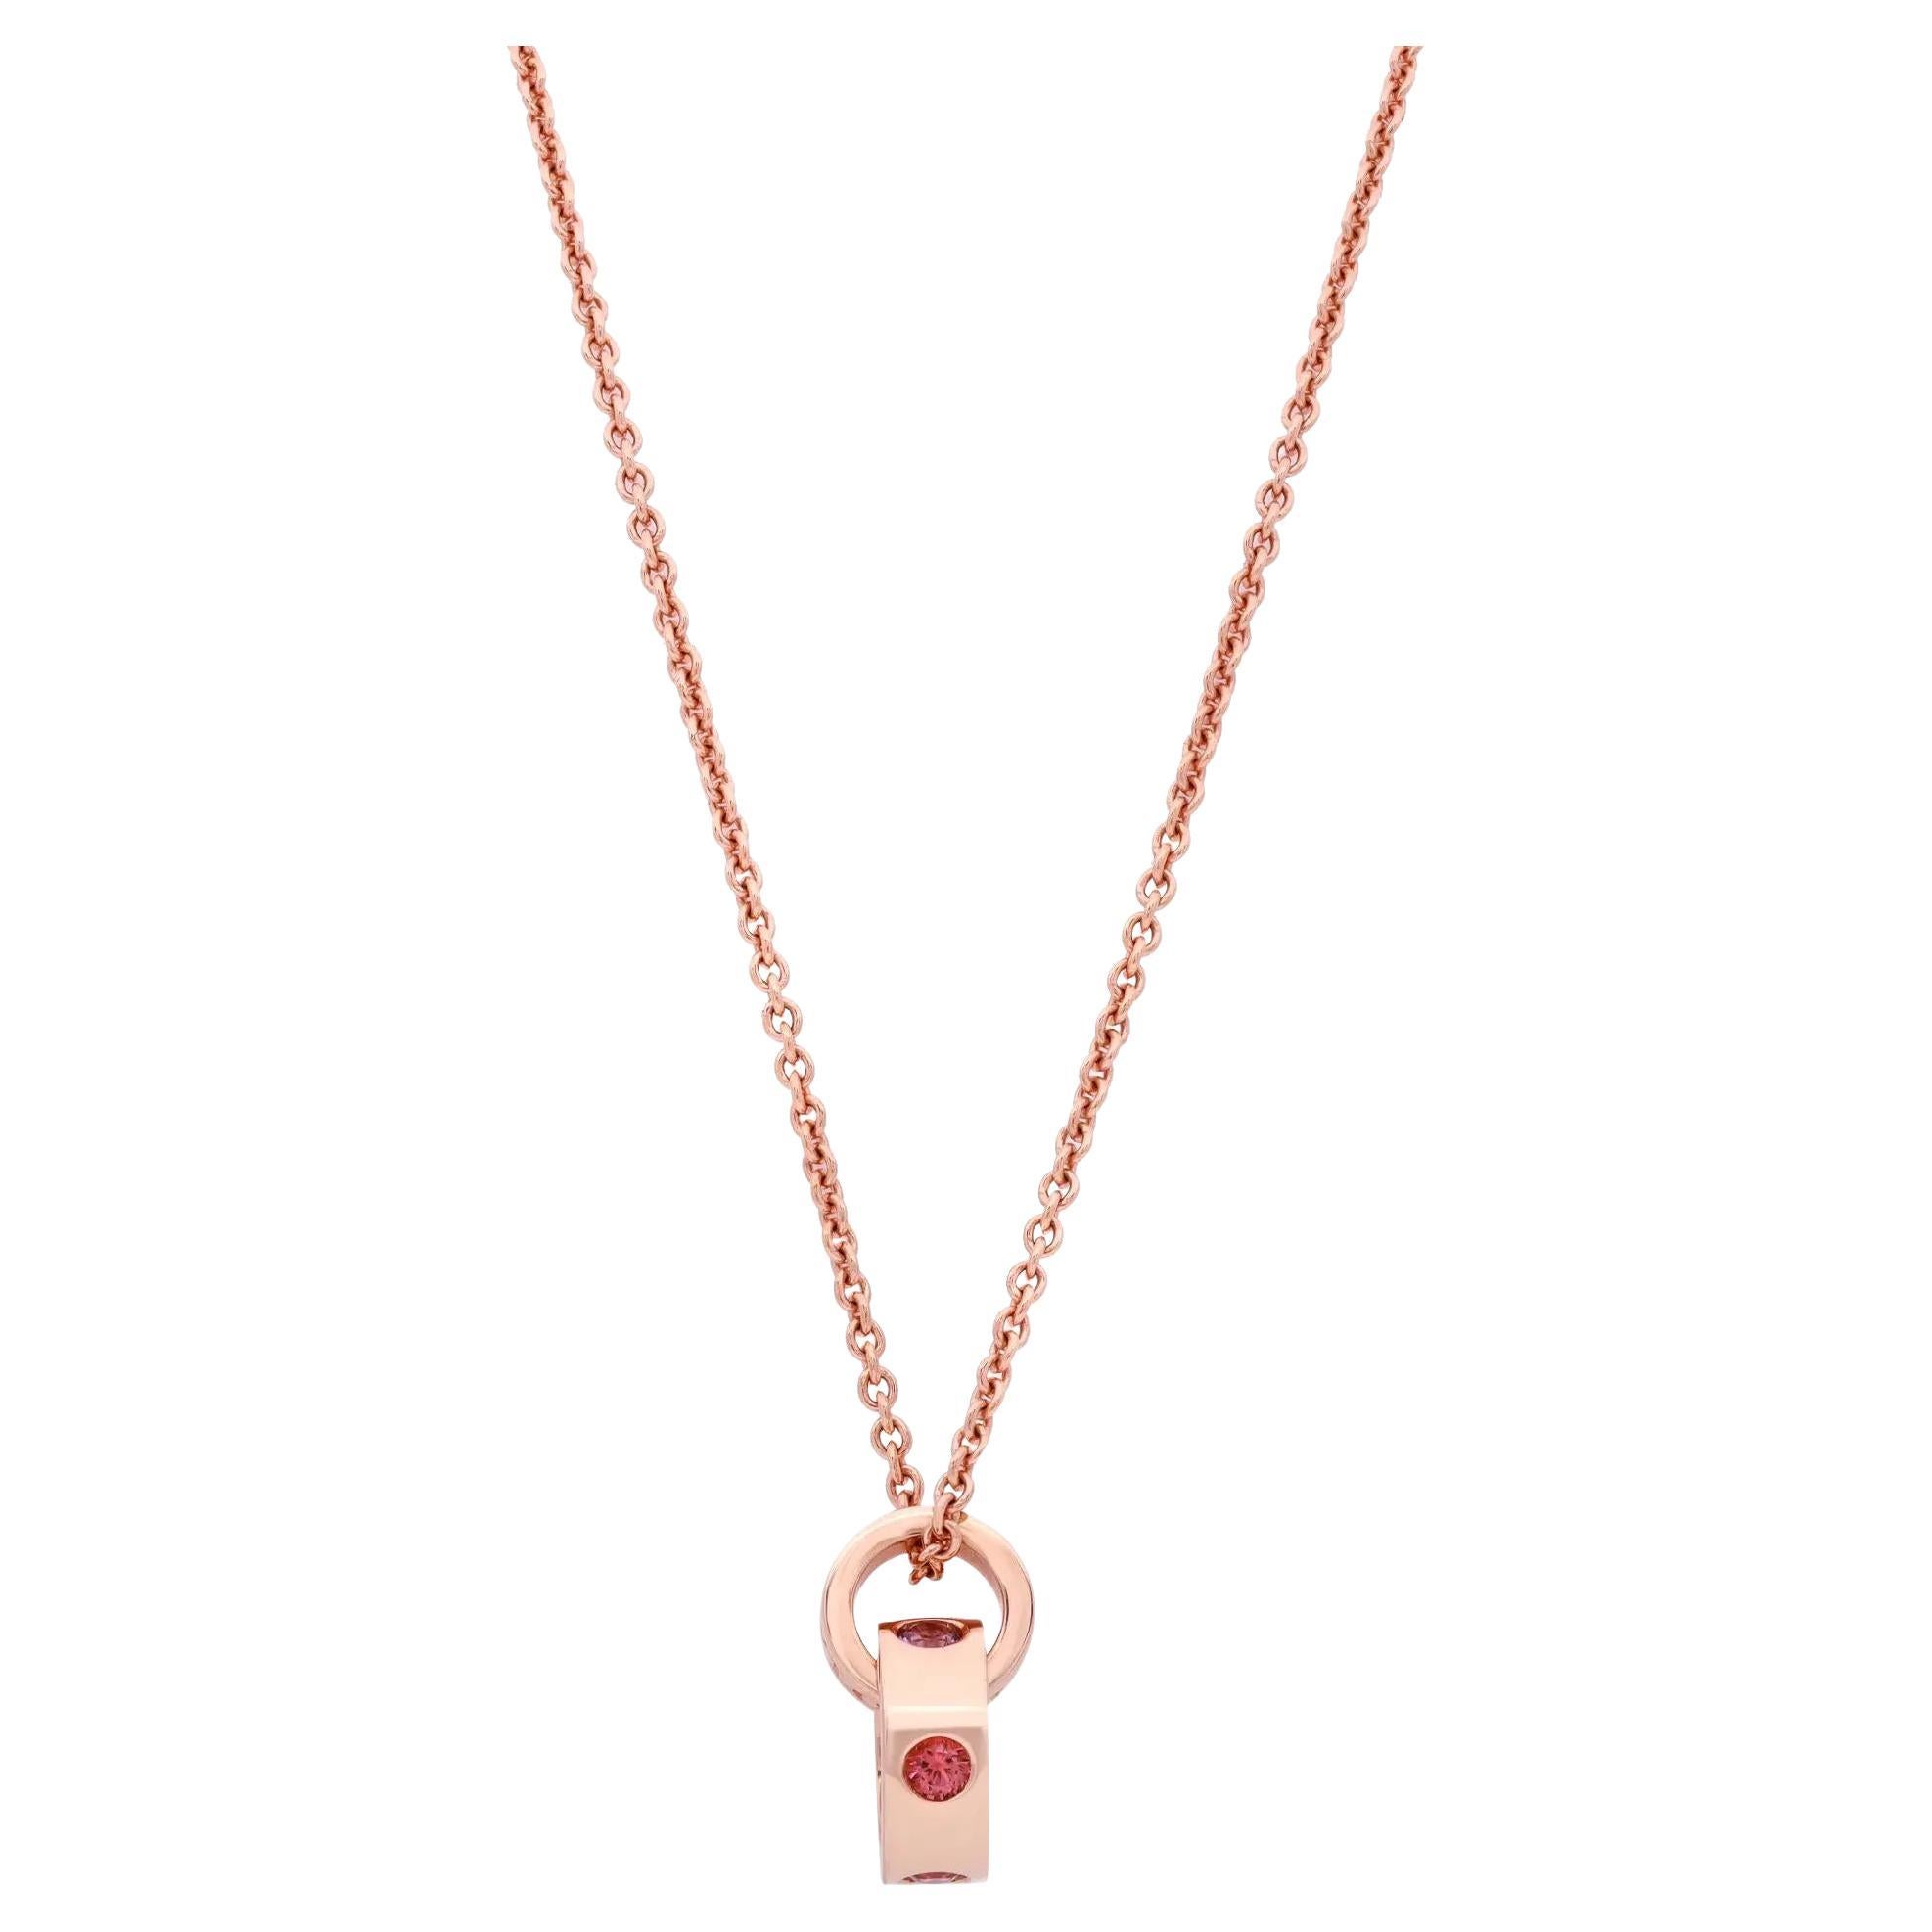 Bvlgari Bvlgari Pink Sapphire & Amethyst Pendant Necklace 18K Rose Gold